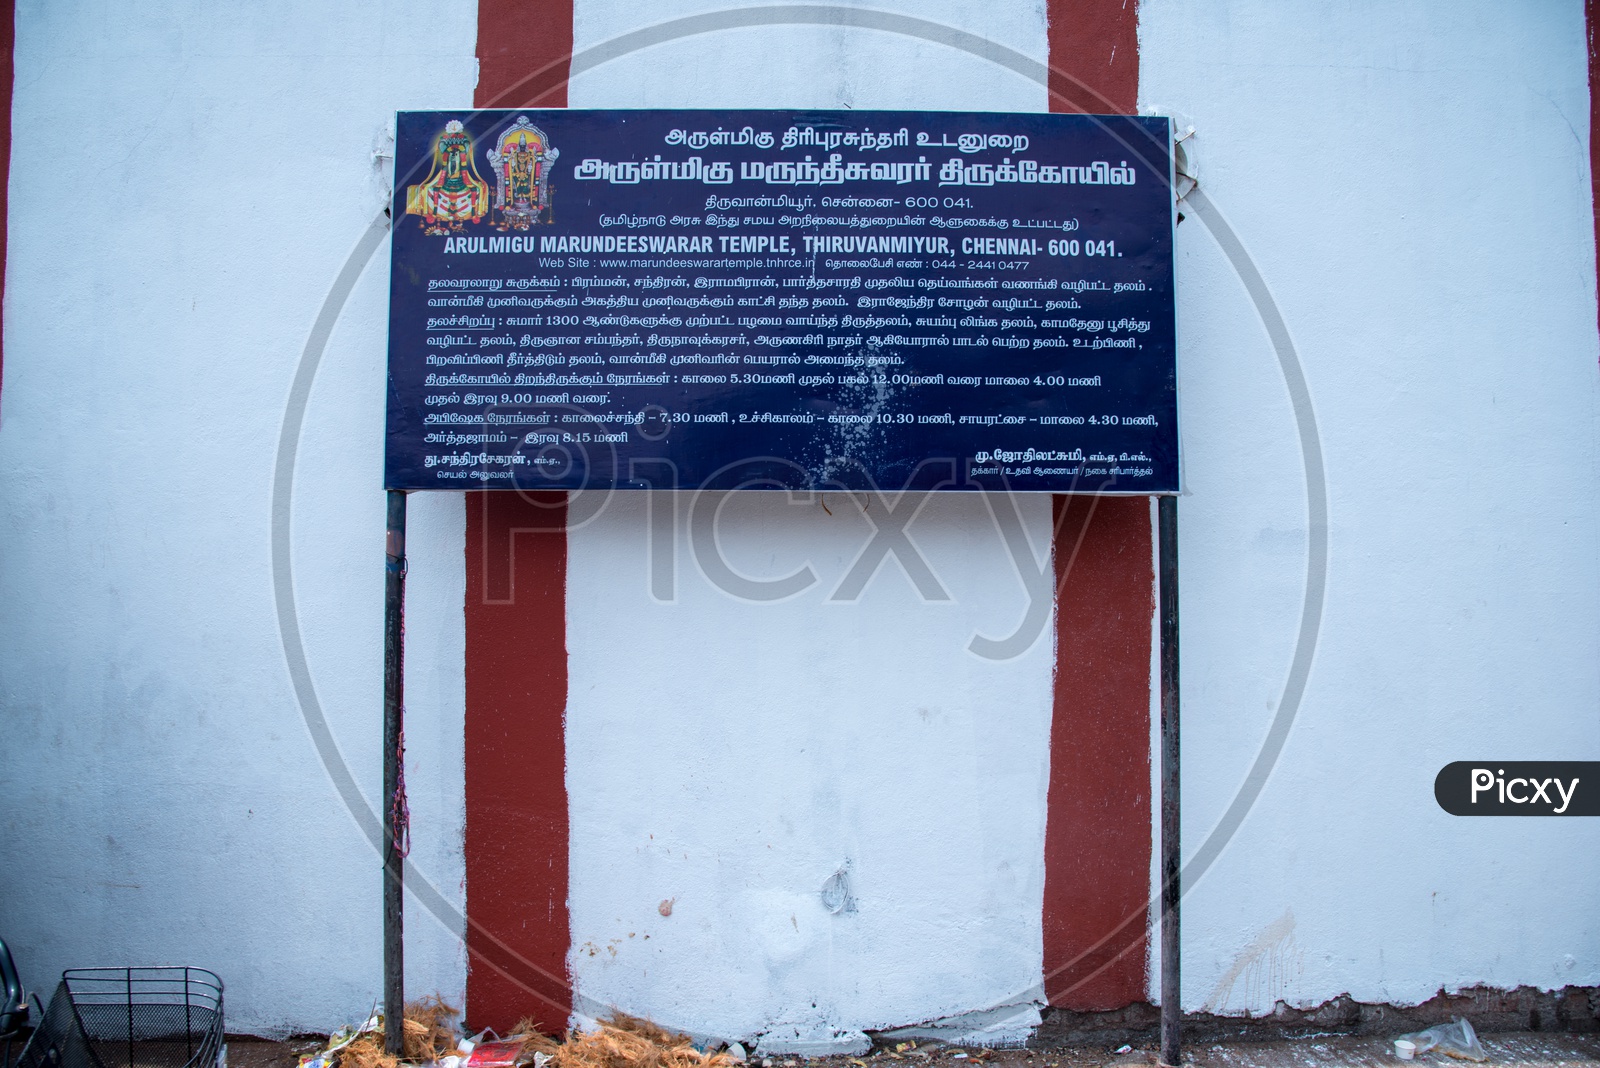 Arulmigu Marundeeswar temple,Tiruvanmiyur,chennai..